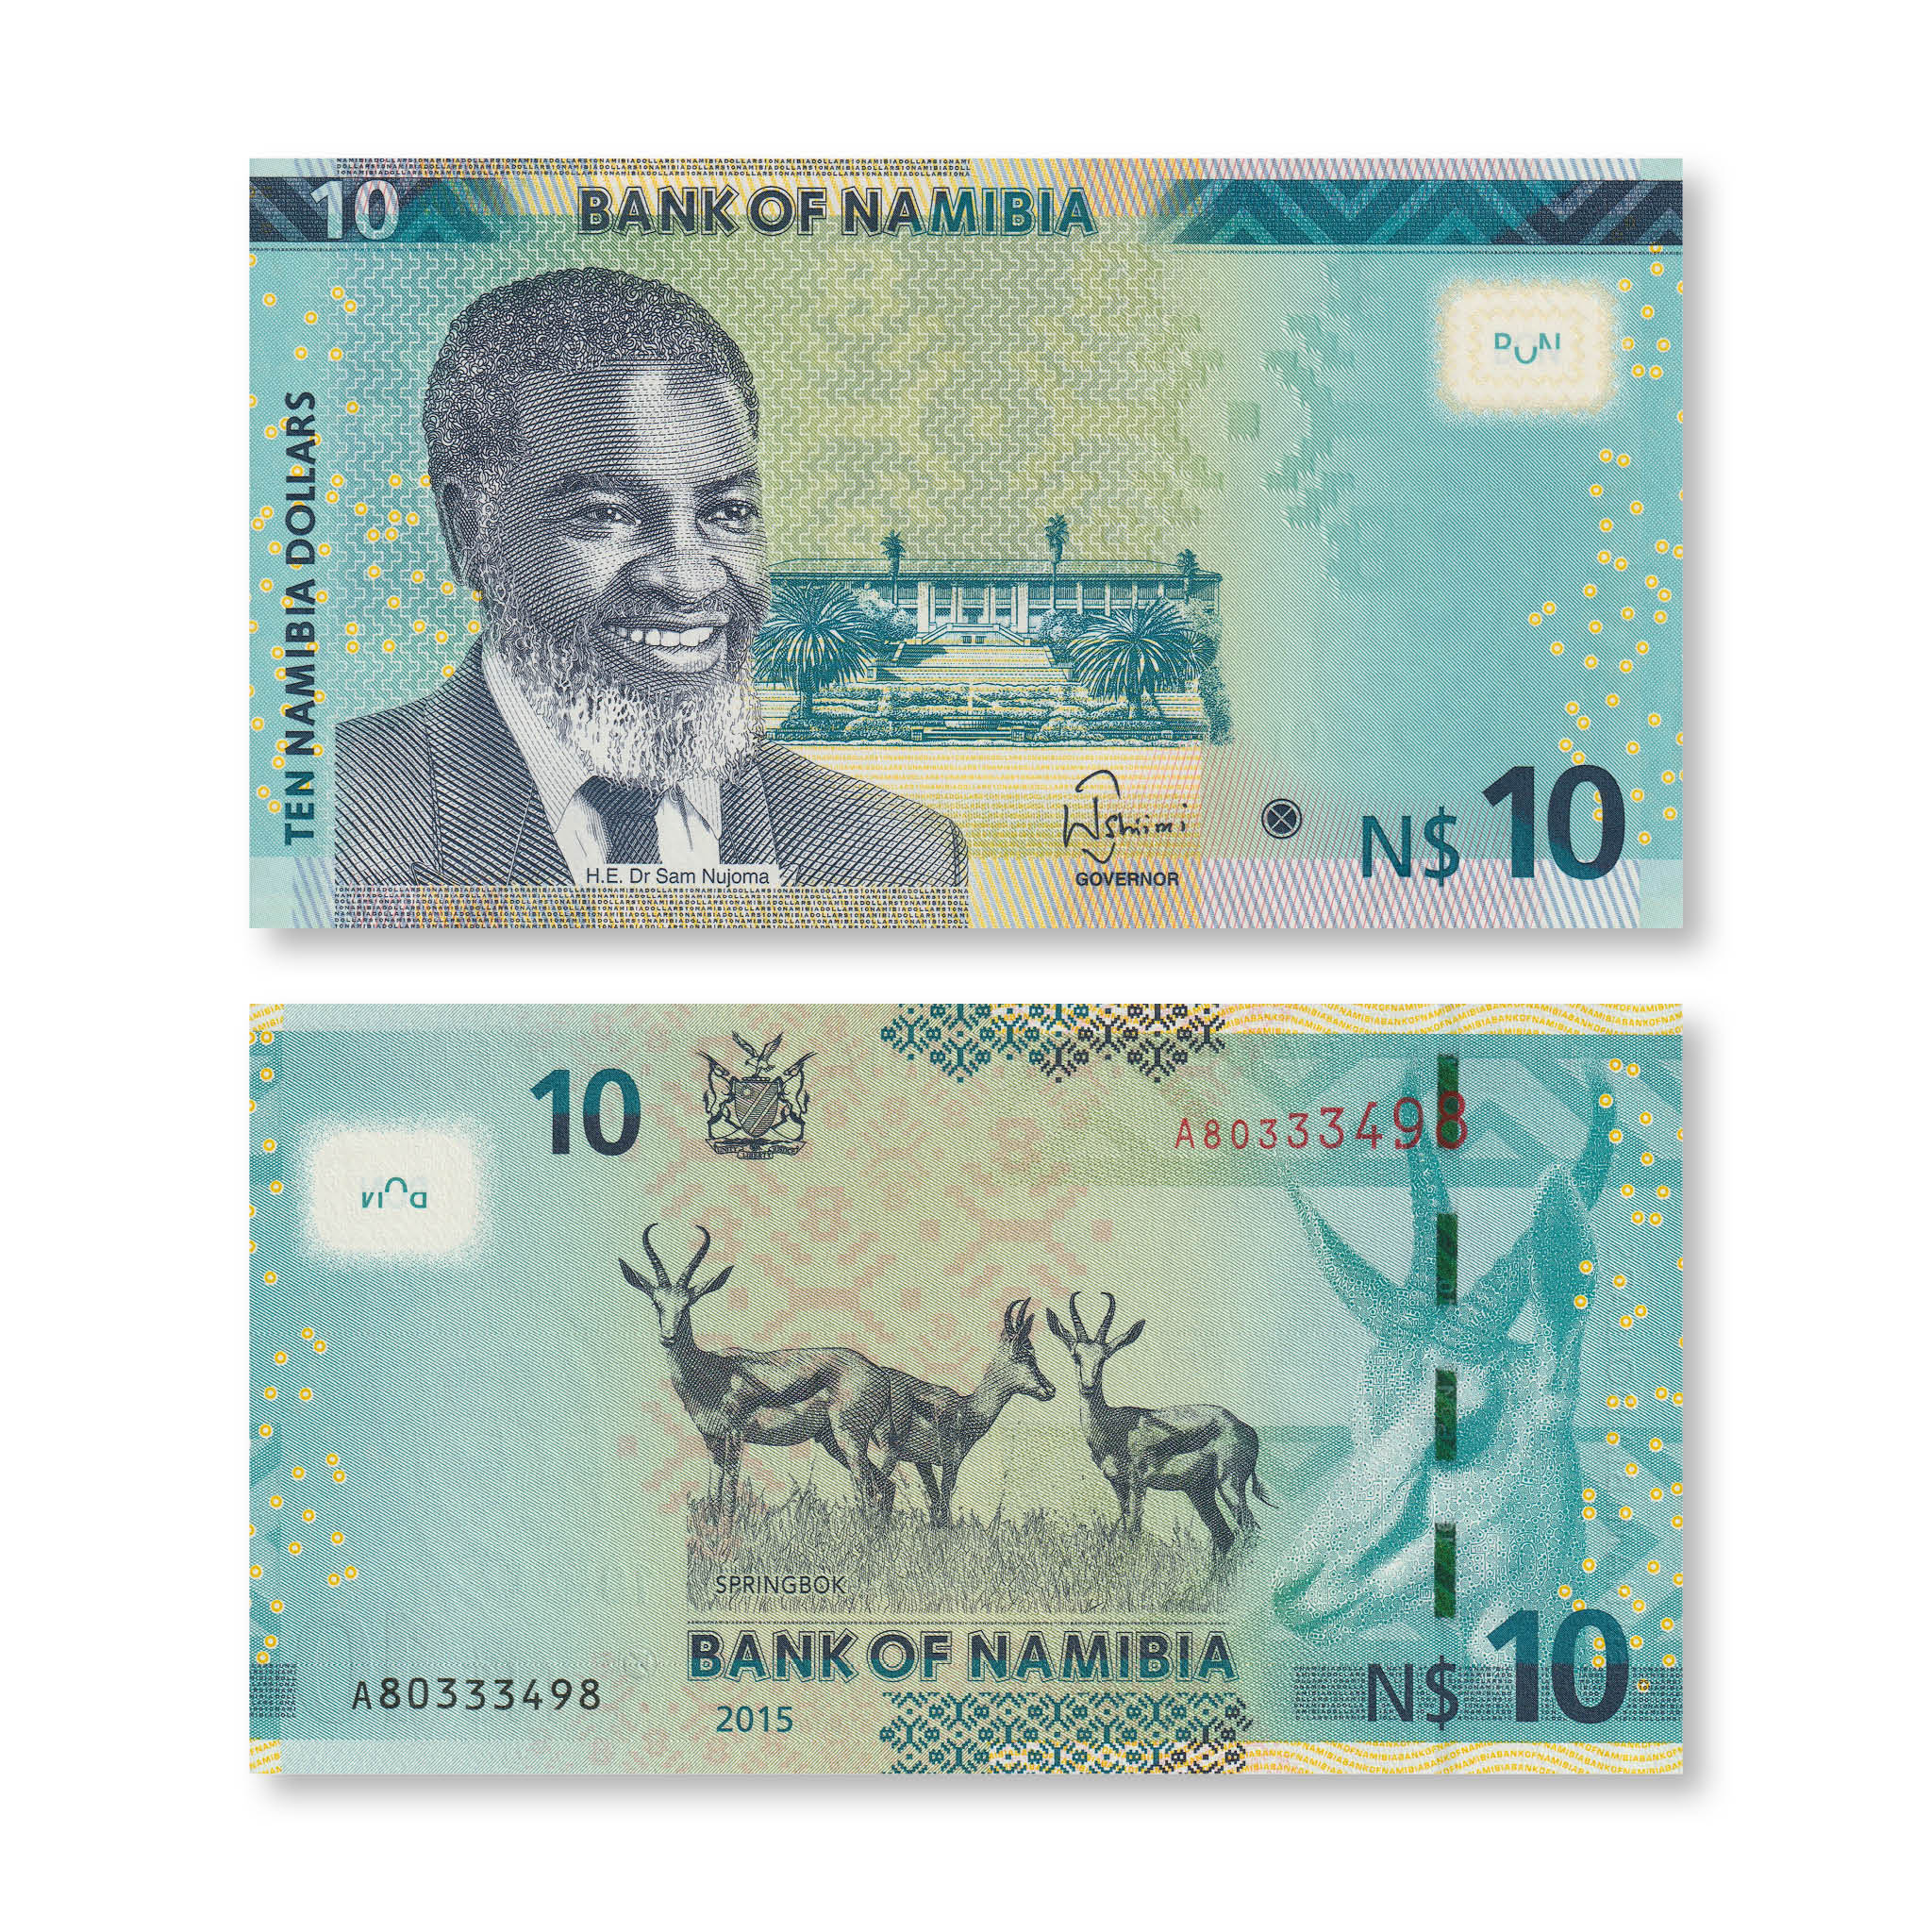 Namibia 10 Dollars, 2015, B216a, P16, UNC - Robert's World Money - World Banknotes